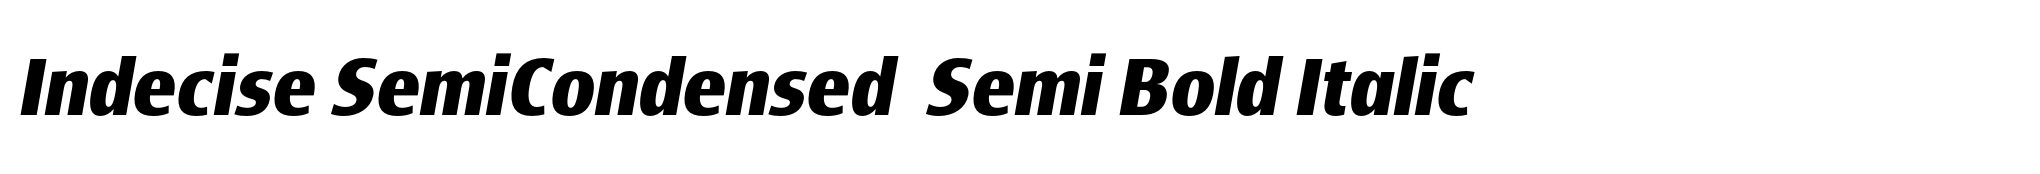 Indecise SemiCondensed  Semi Bold Italic image